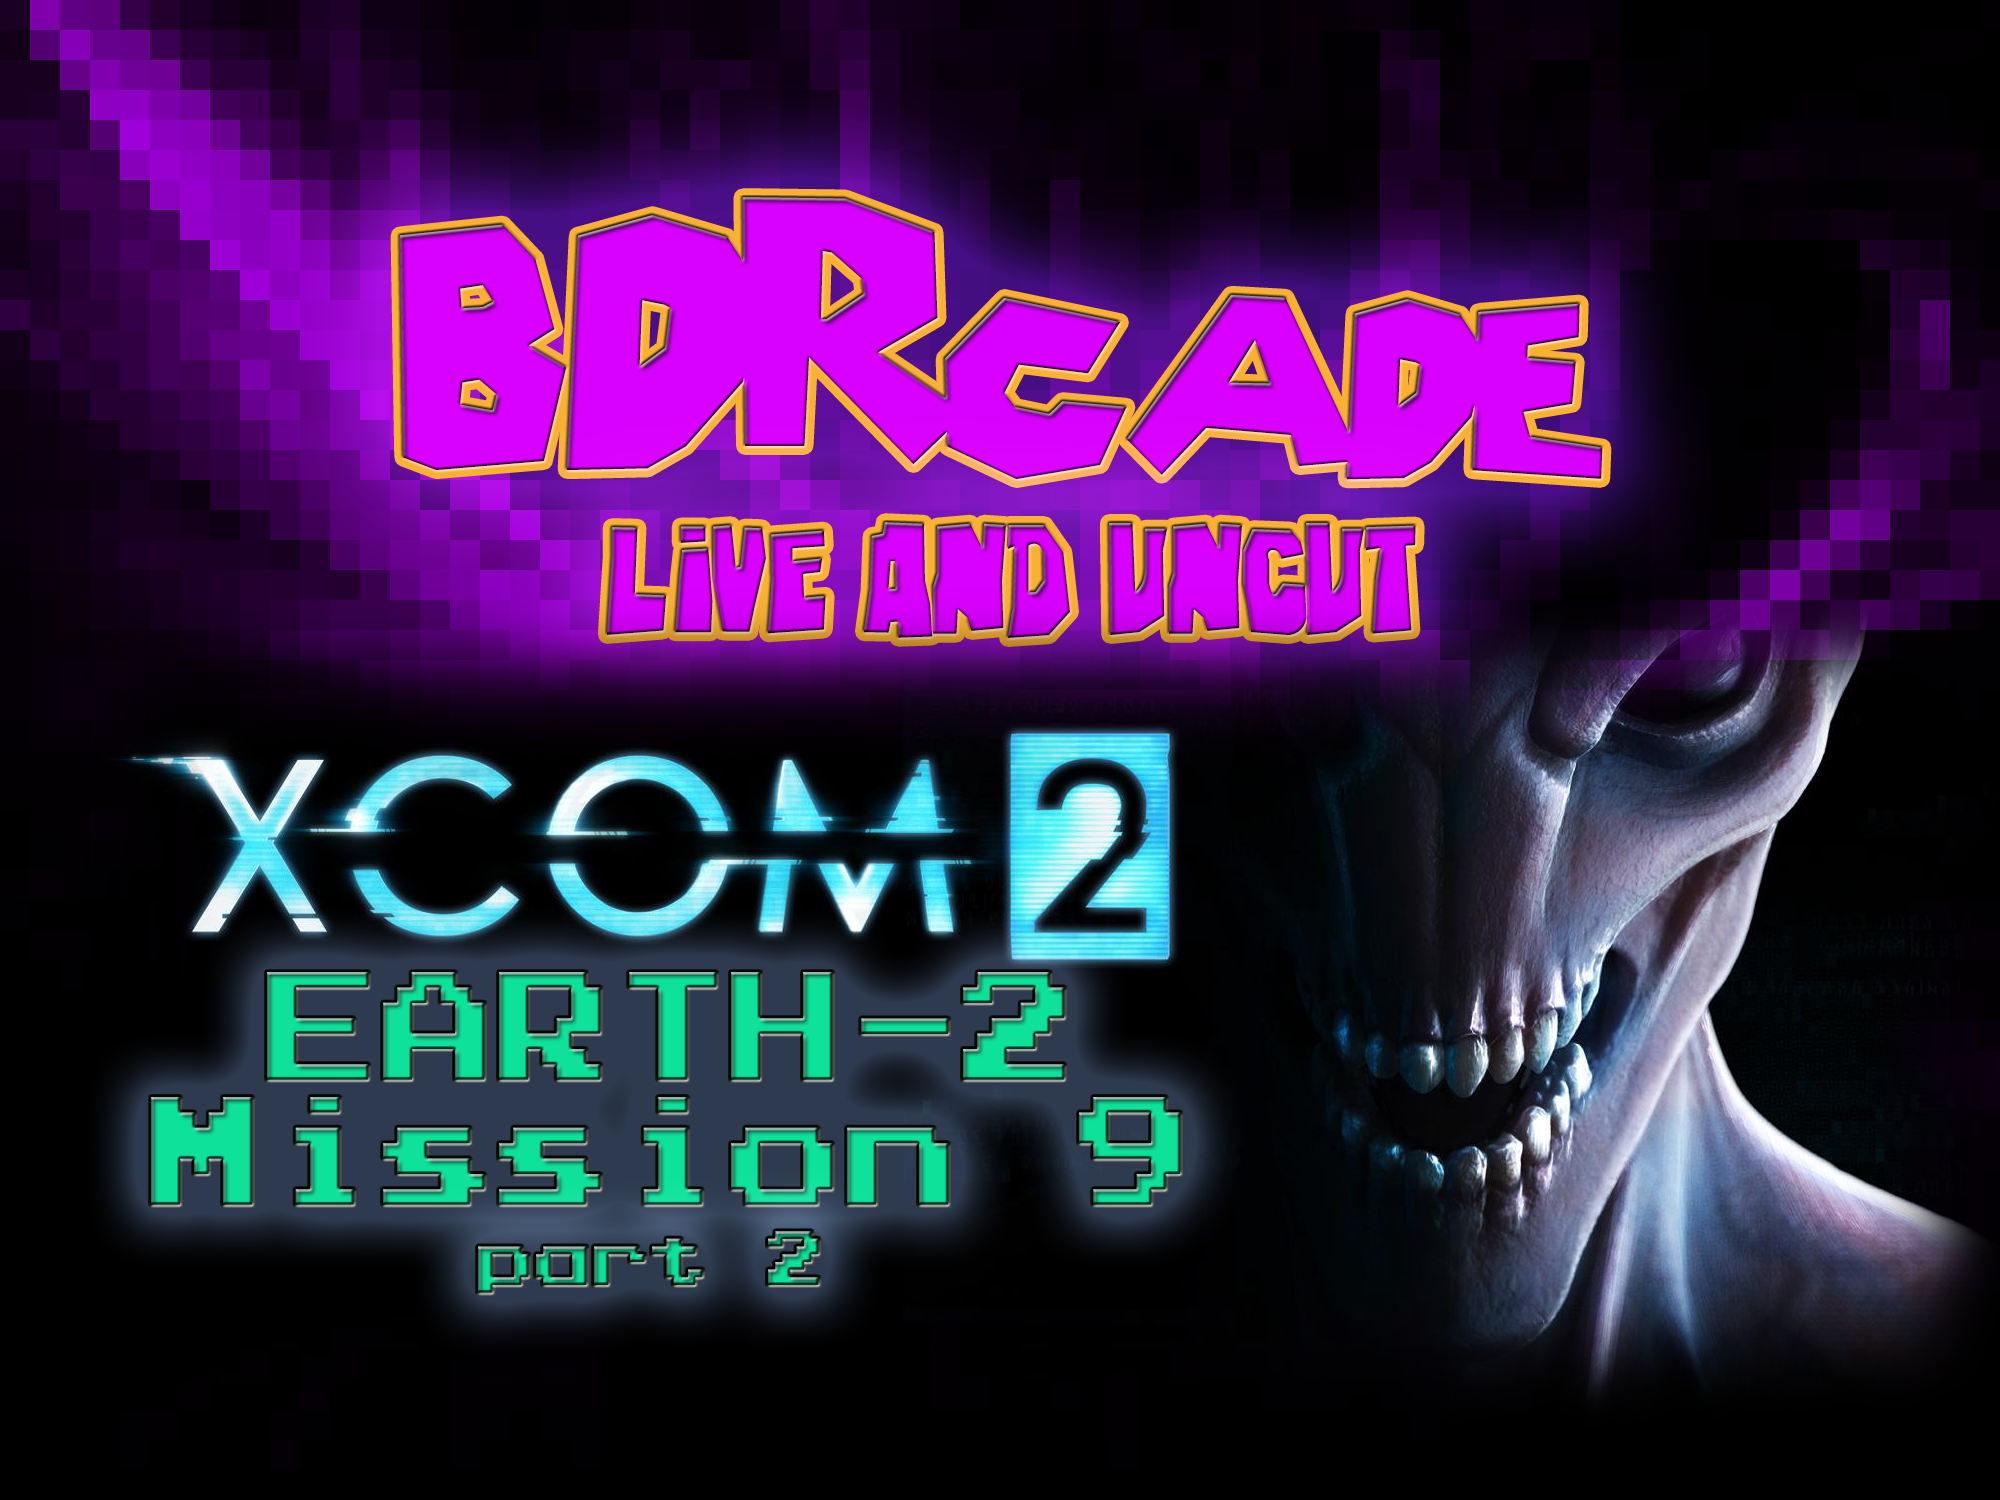 XCOM 2 (Earth-2) : Mission 9 Part 2 – A BDRcade Live Stream